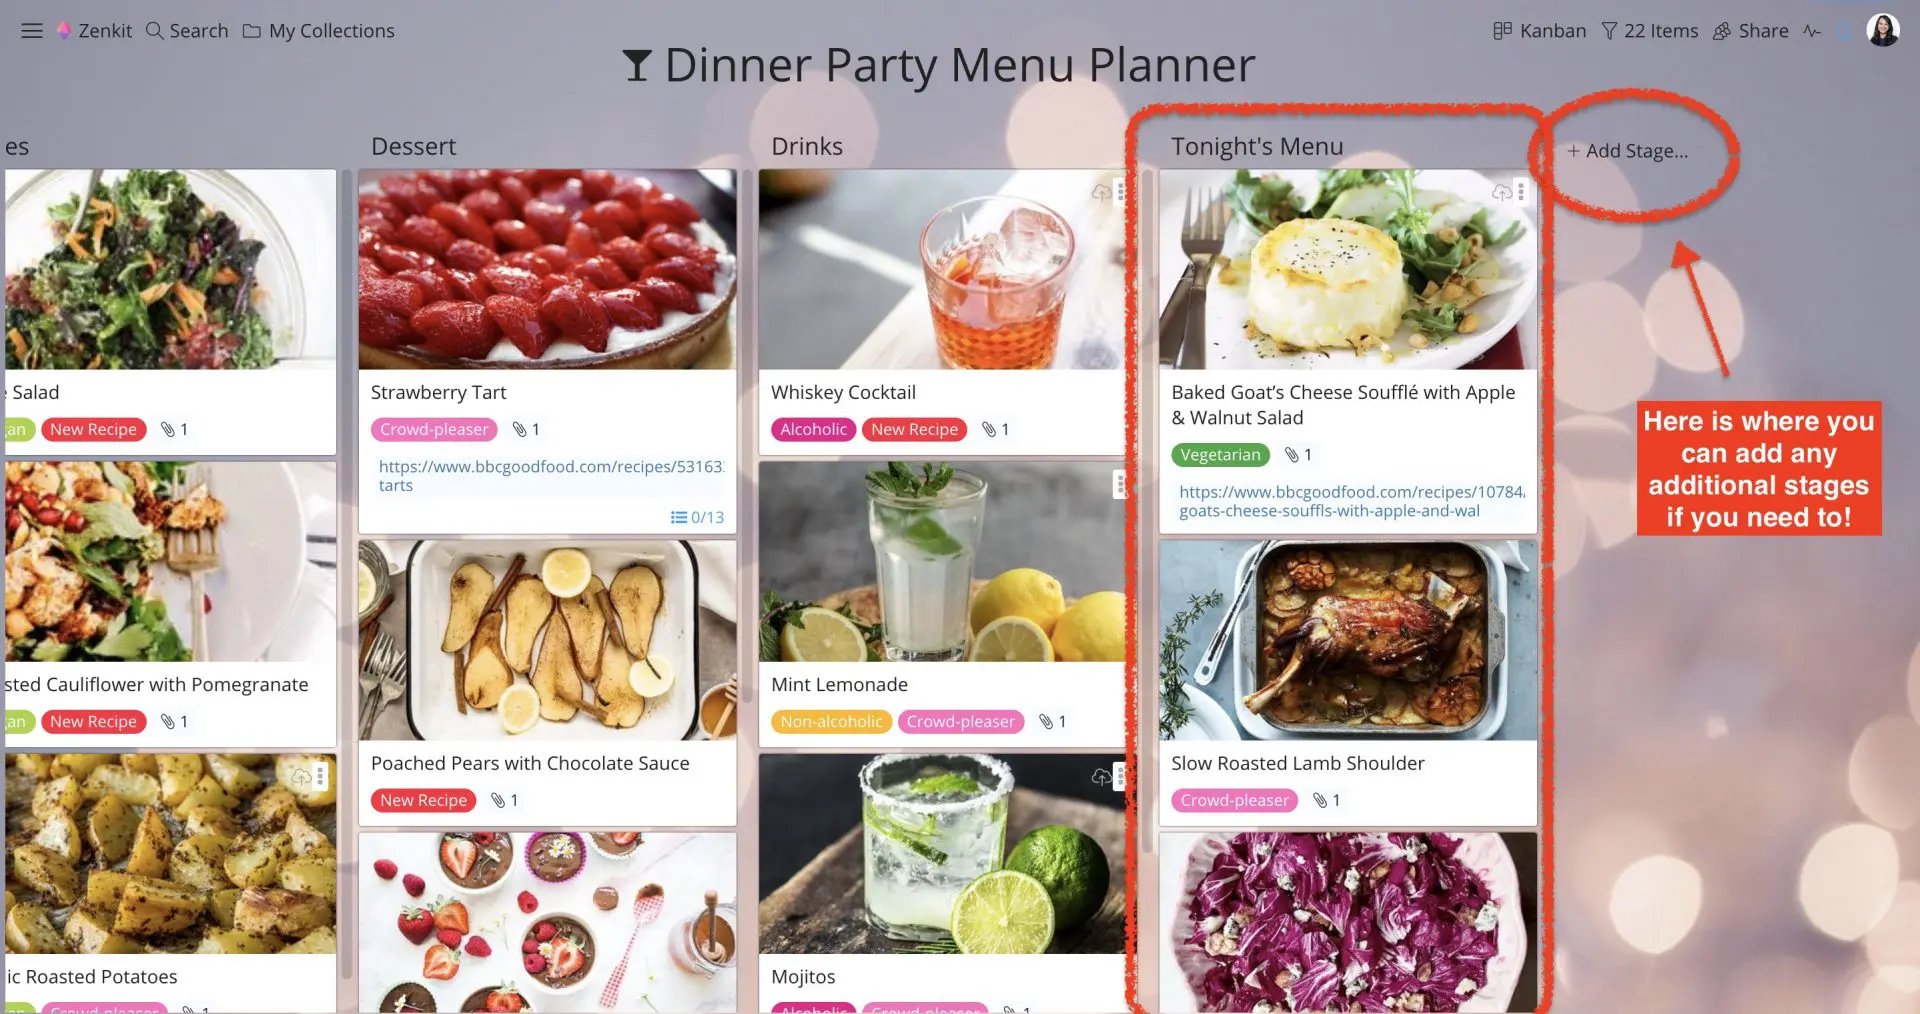 Dinner party menu planner on Zenkit Kanban board